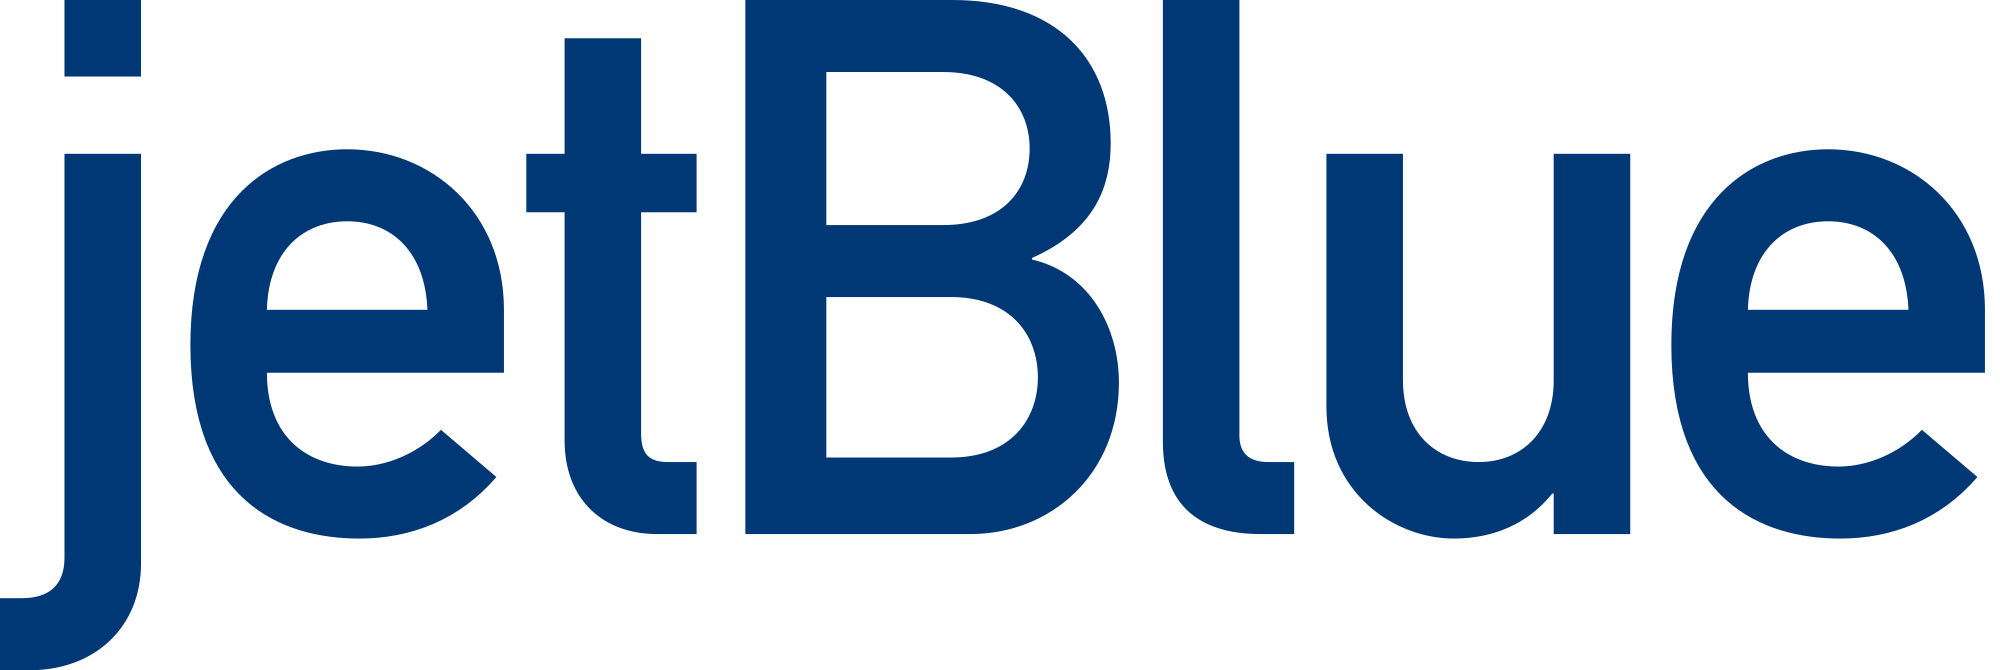 jetblue-logo.png